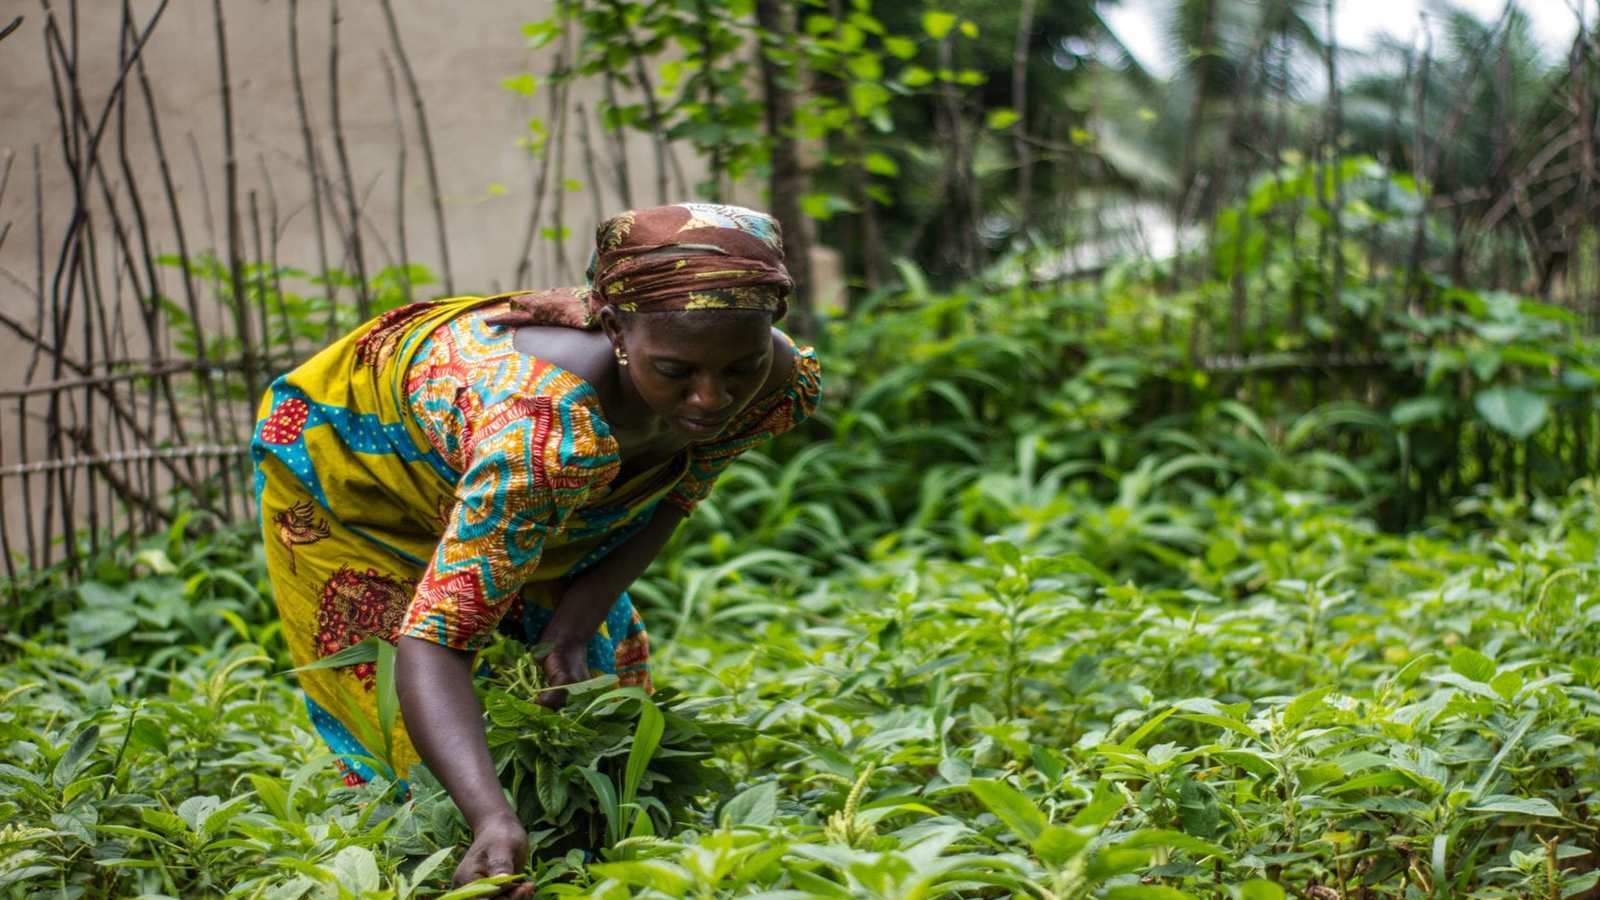 CABI allies with Rainforest Alliance to aid farmers grow safe, high quality food